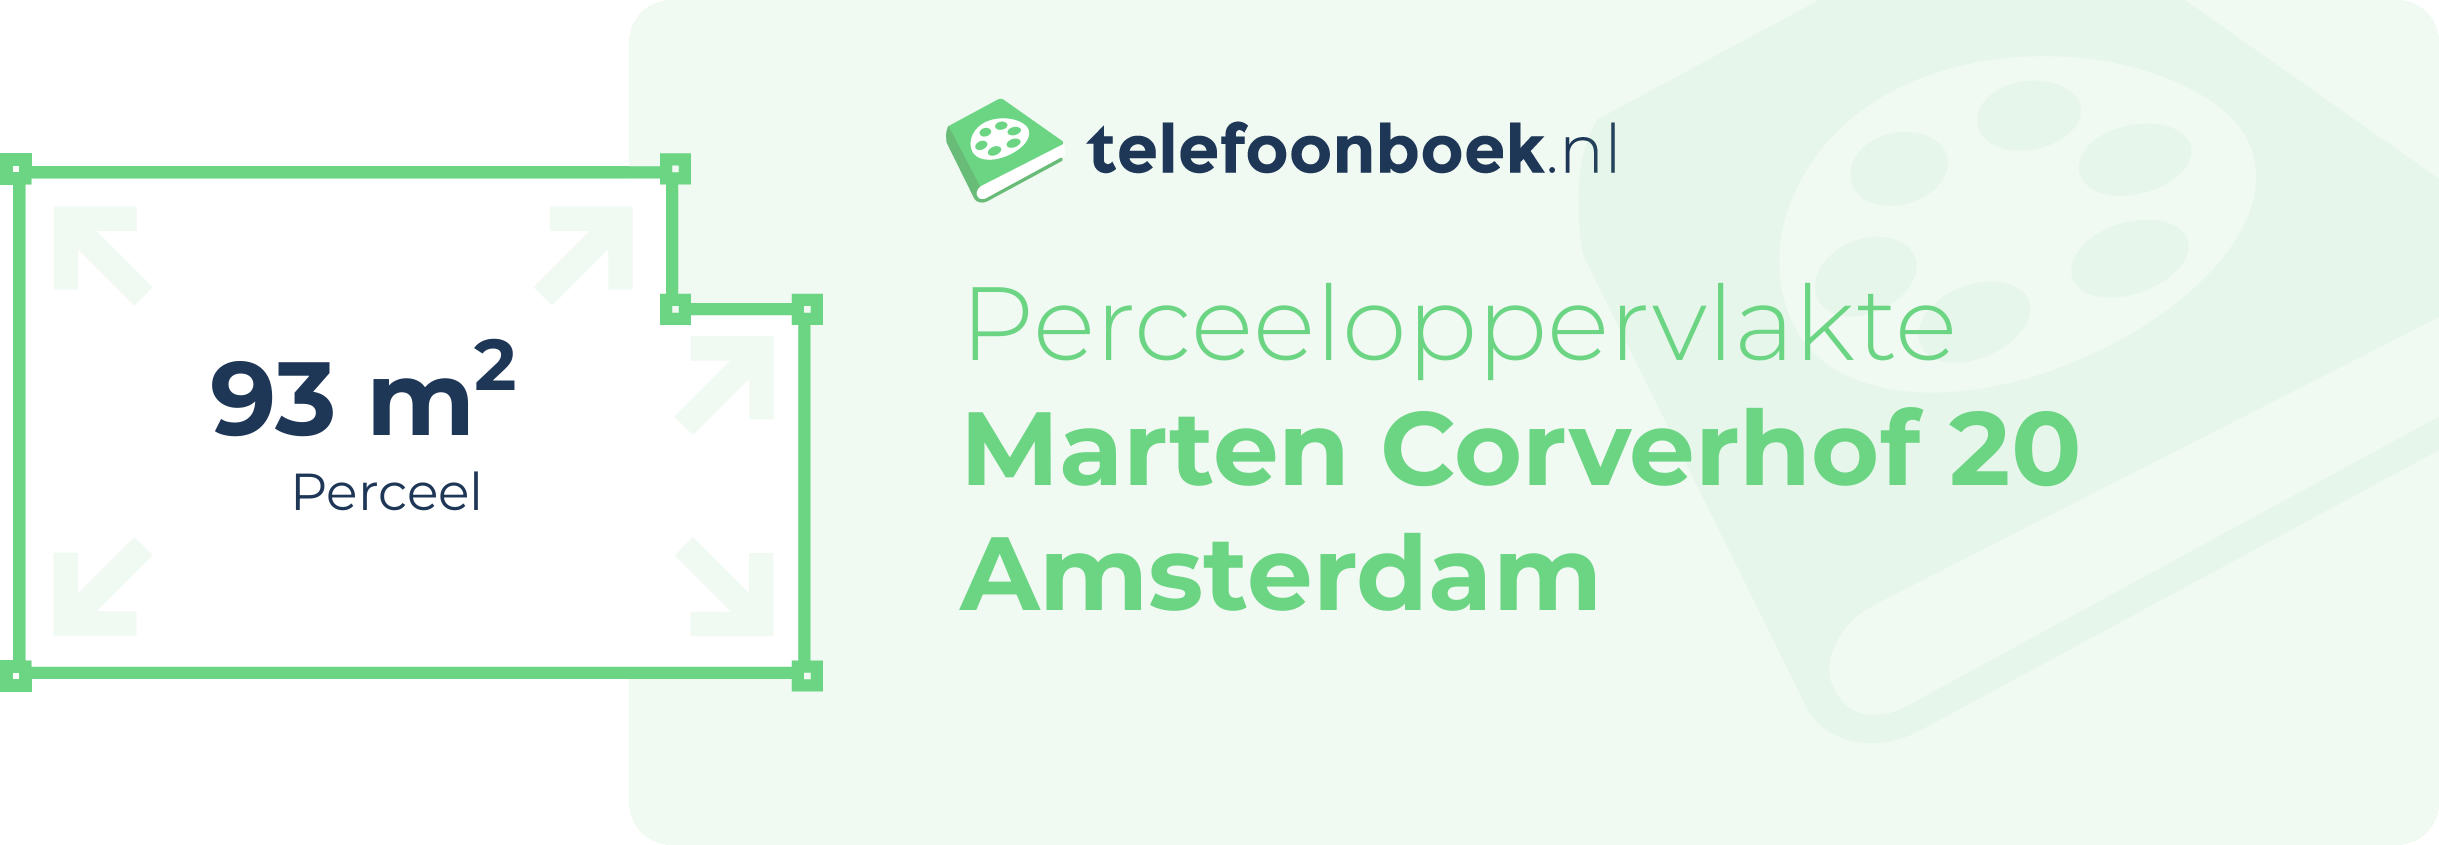 Perceeloppervlakte Marten Corverhof 20 Amsterdam